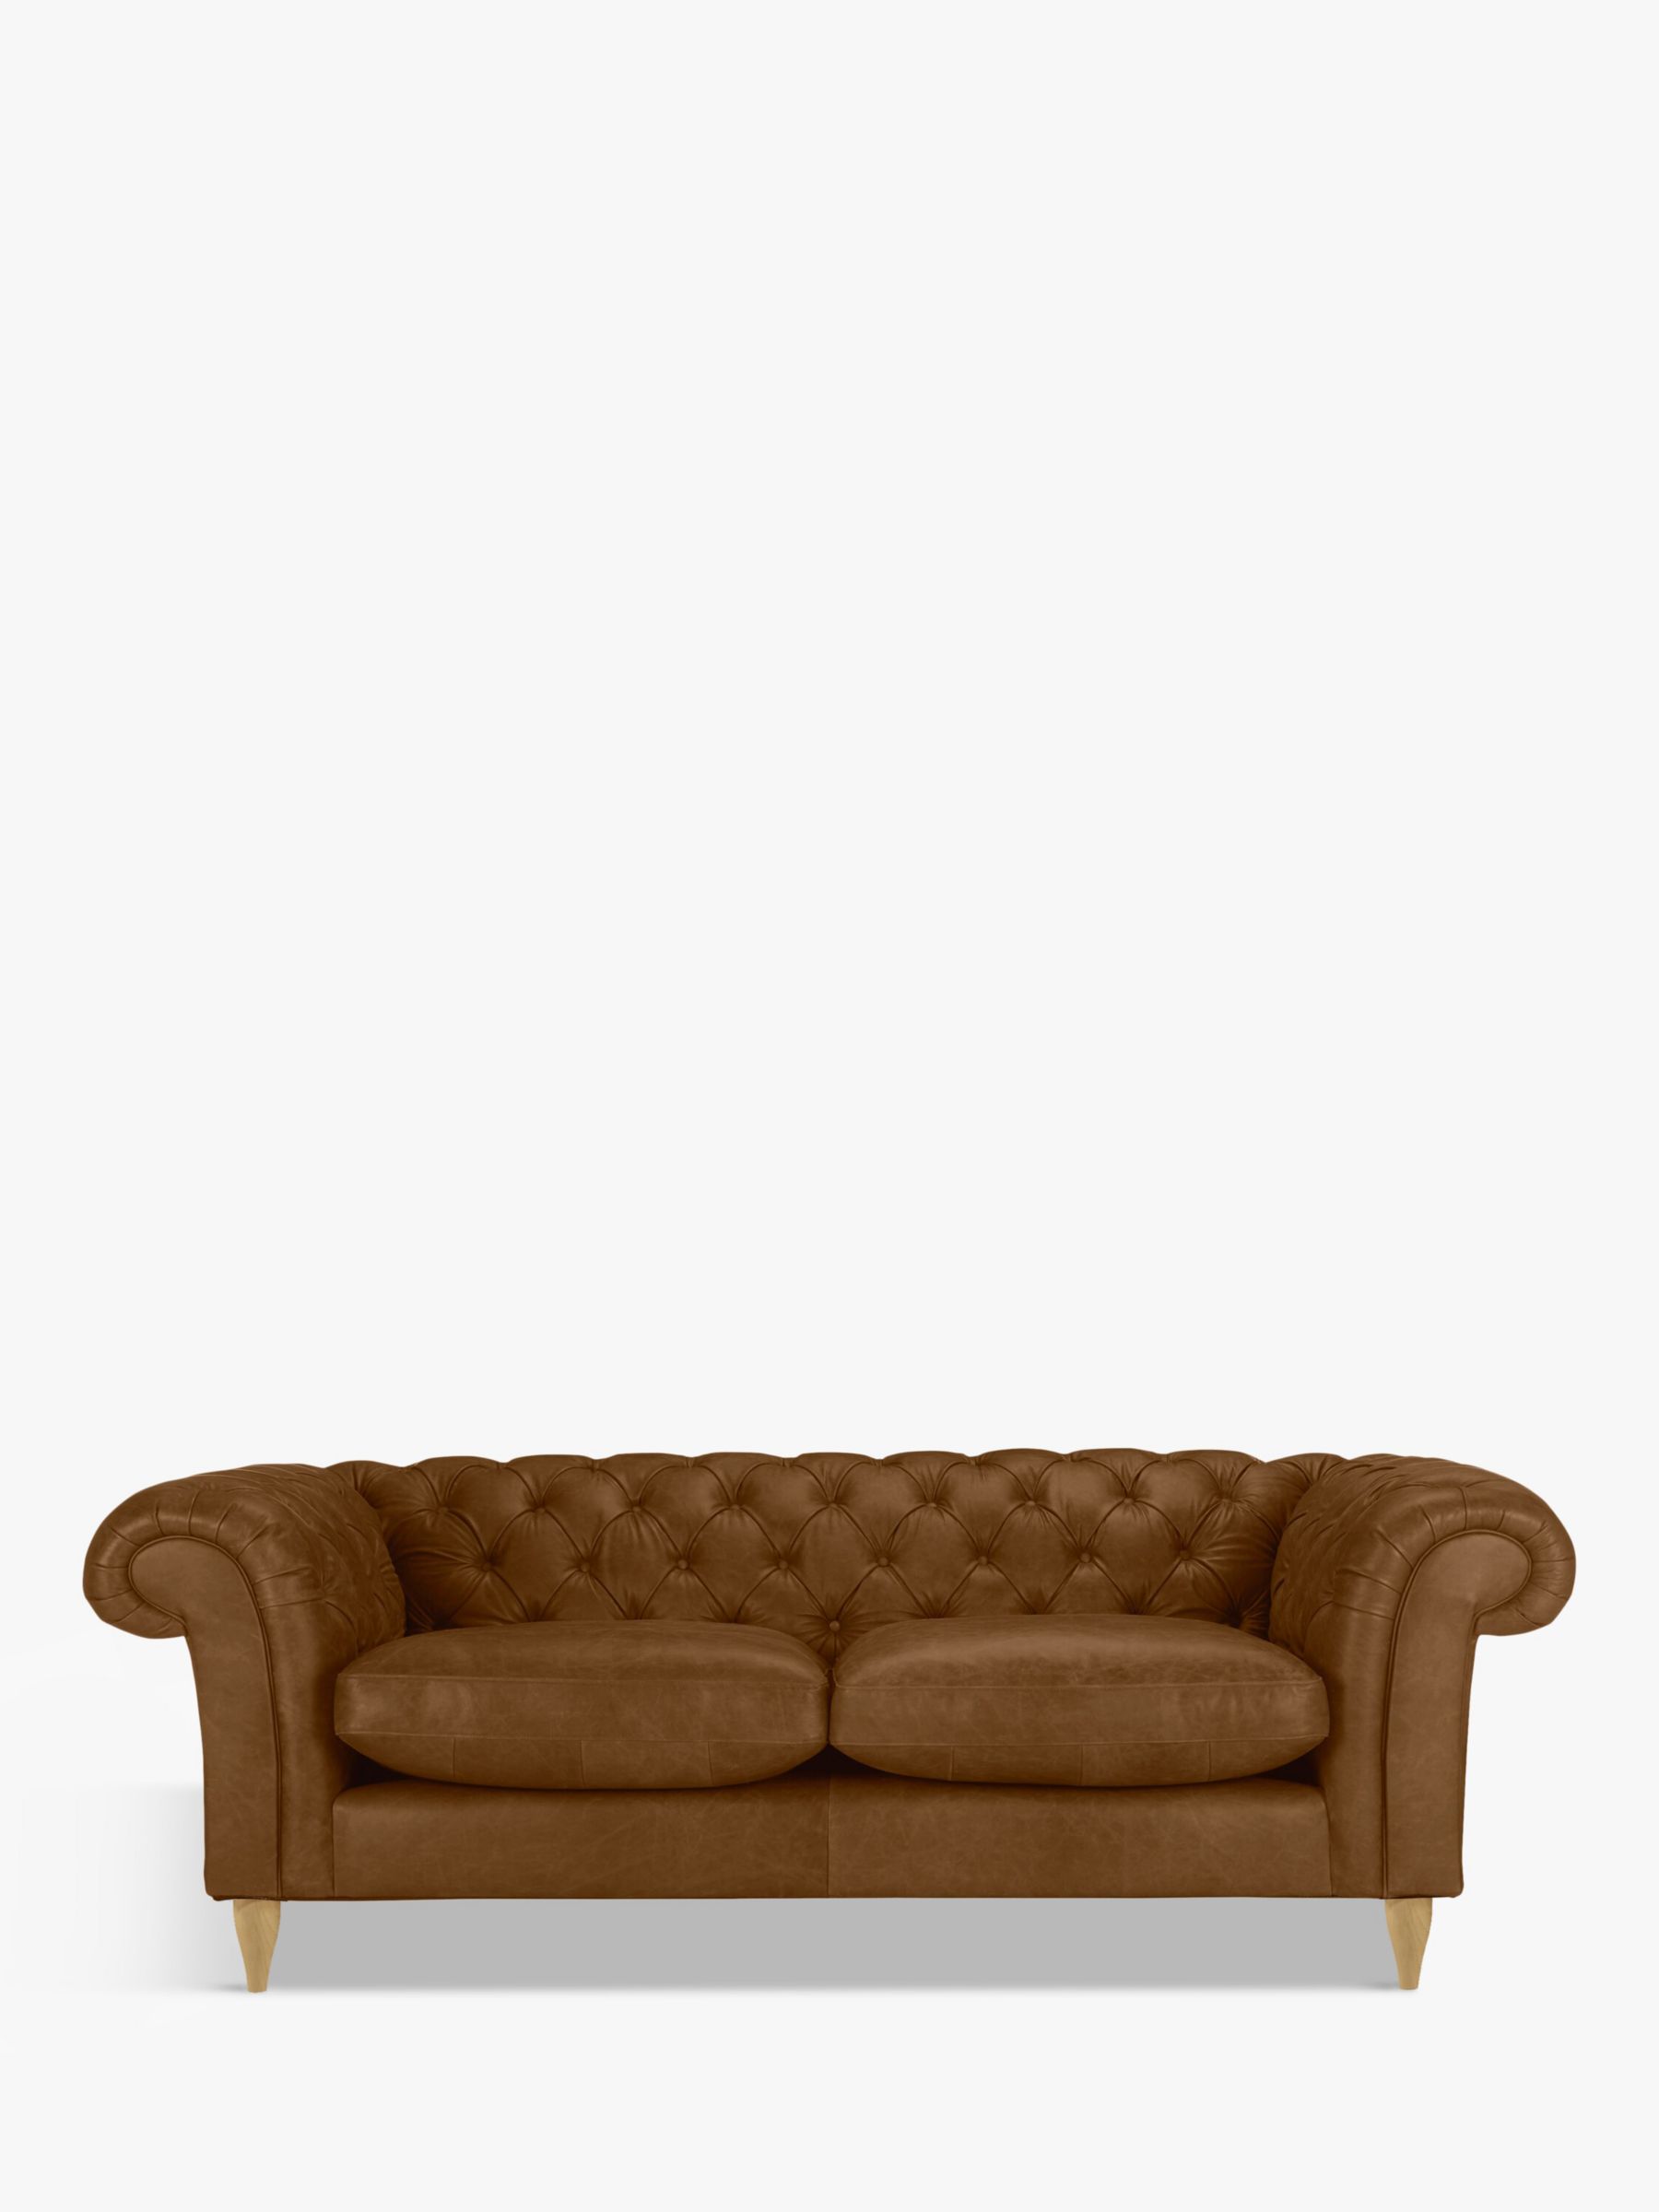 Cromwell Range, John Lewis Cromwell Chesterfield Grand 4 Seater Leather Sofa, Light Leg, Demetra Light Tan